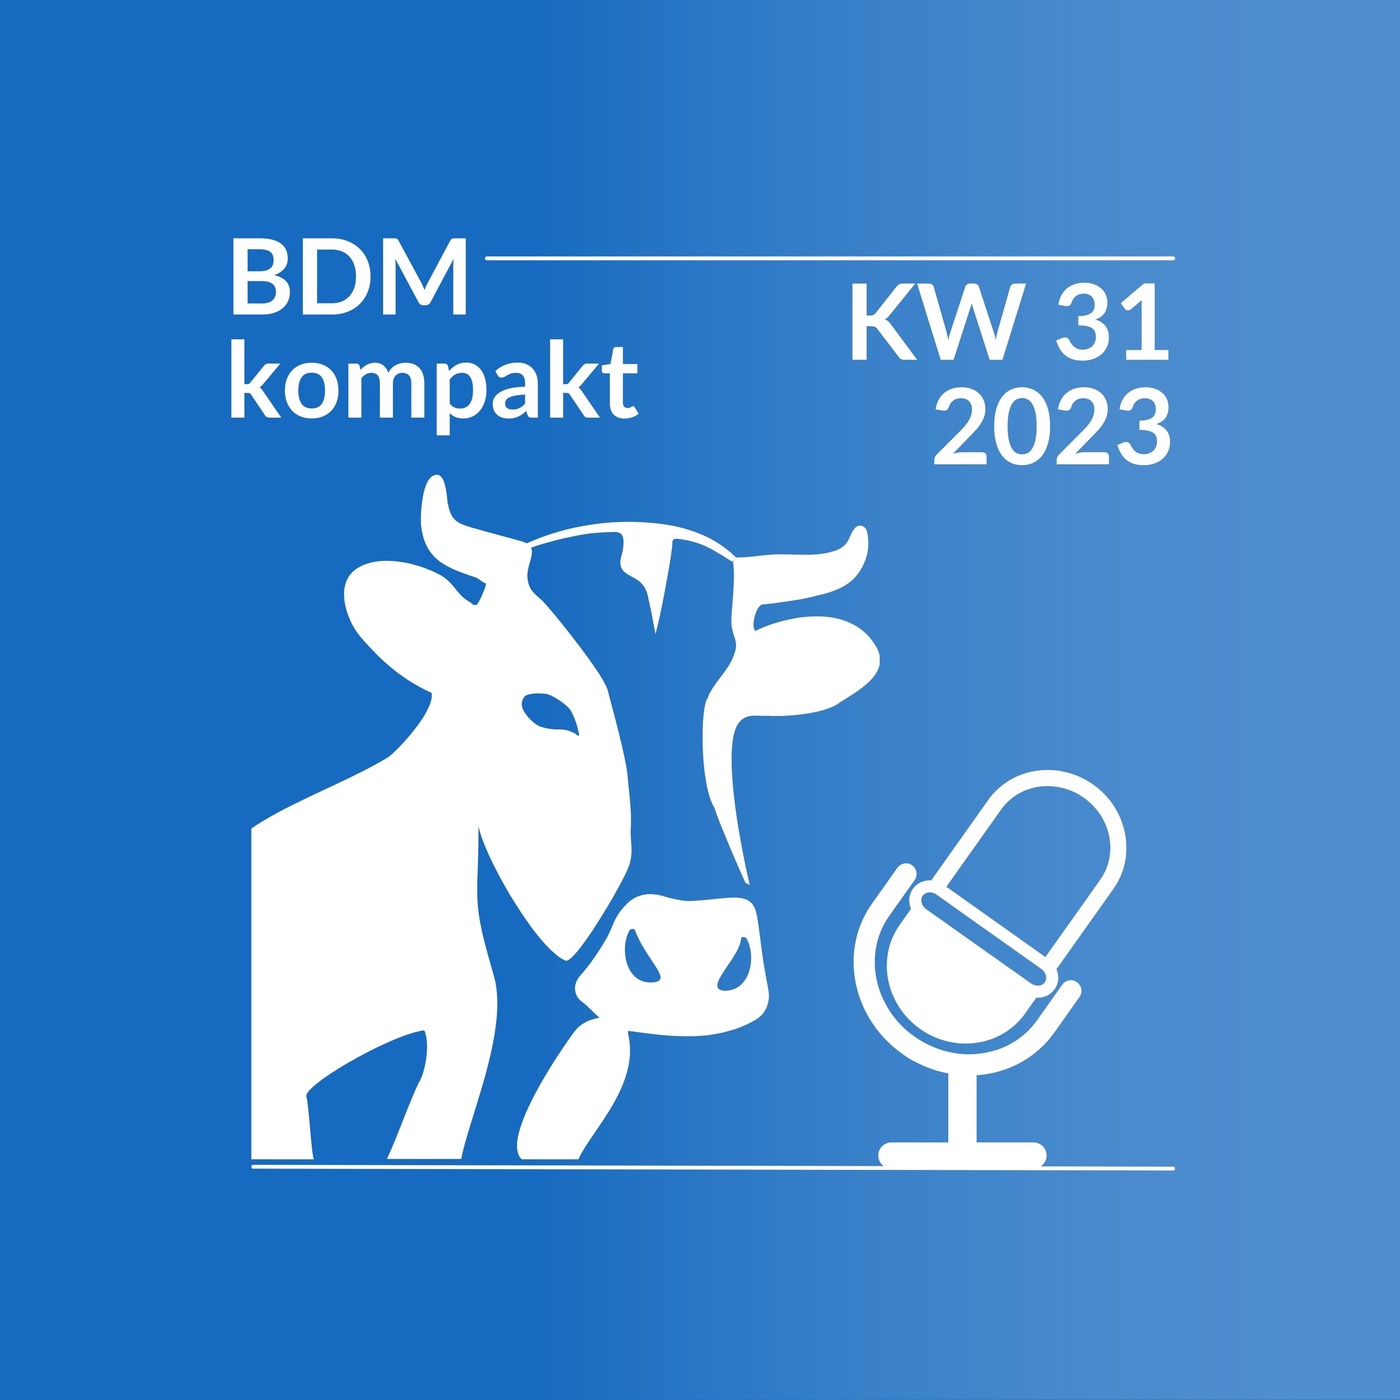 BDM kompakt KW 31/2023